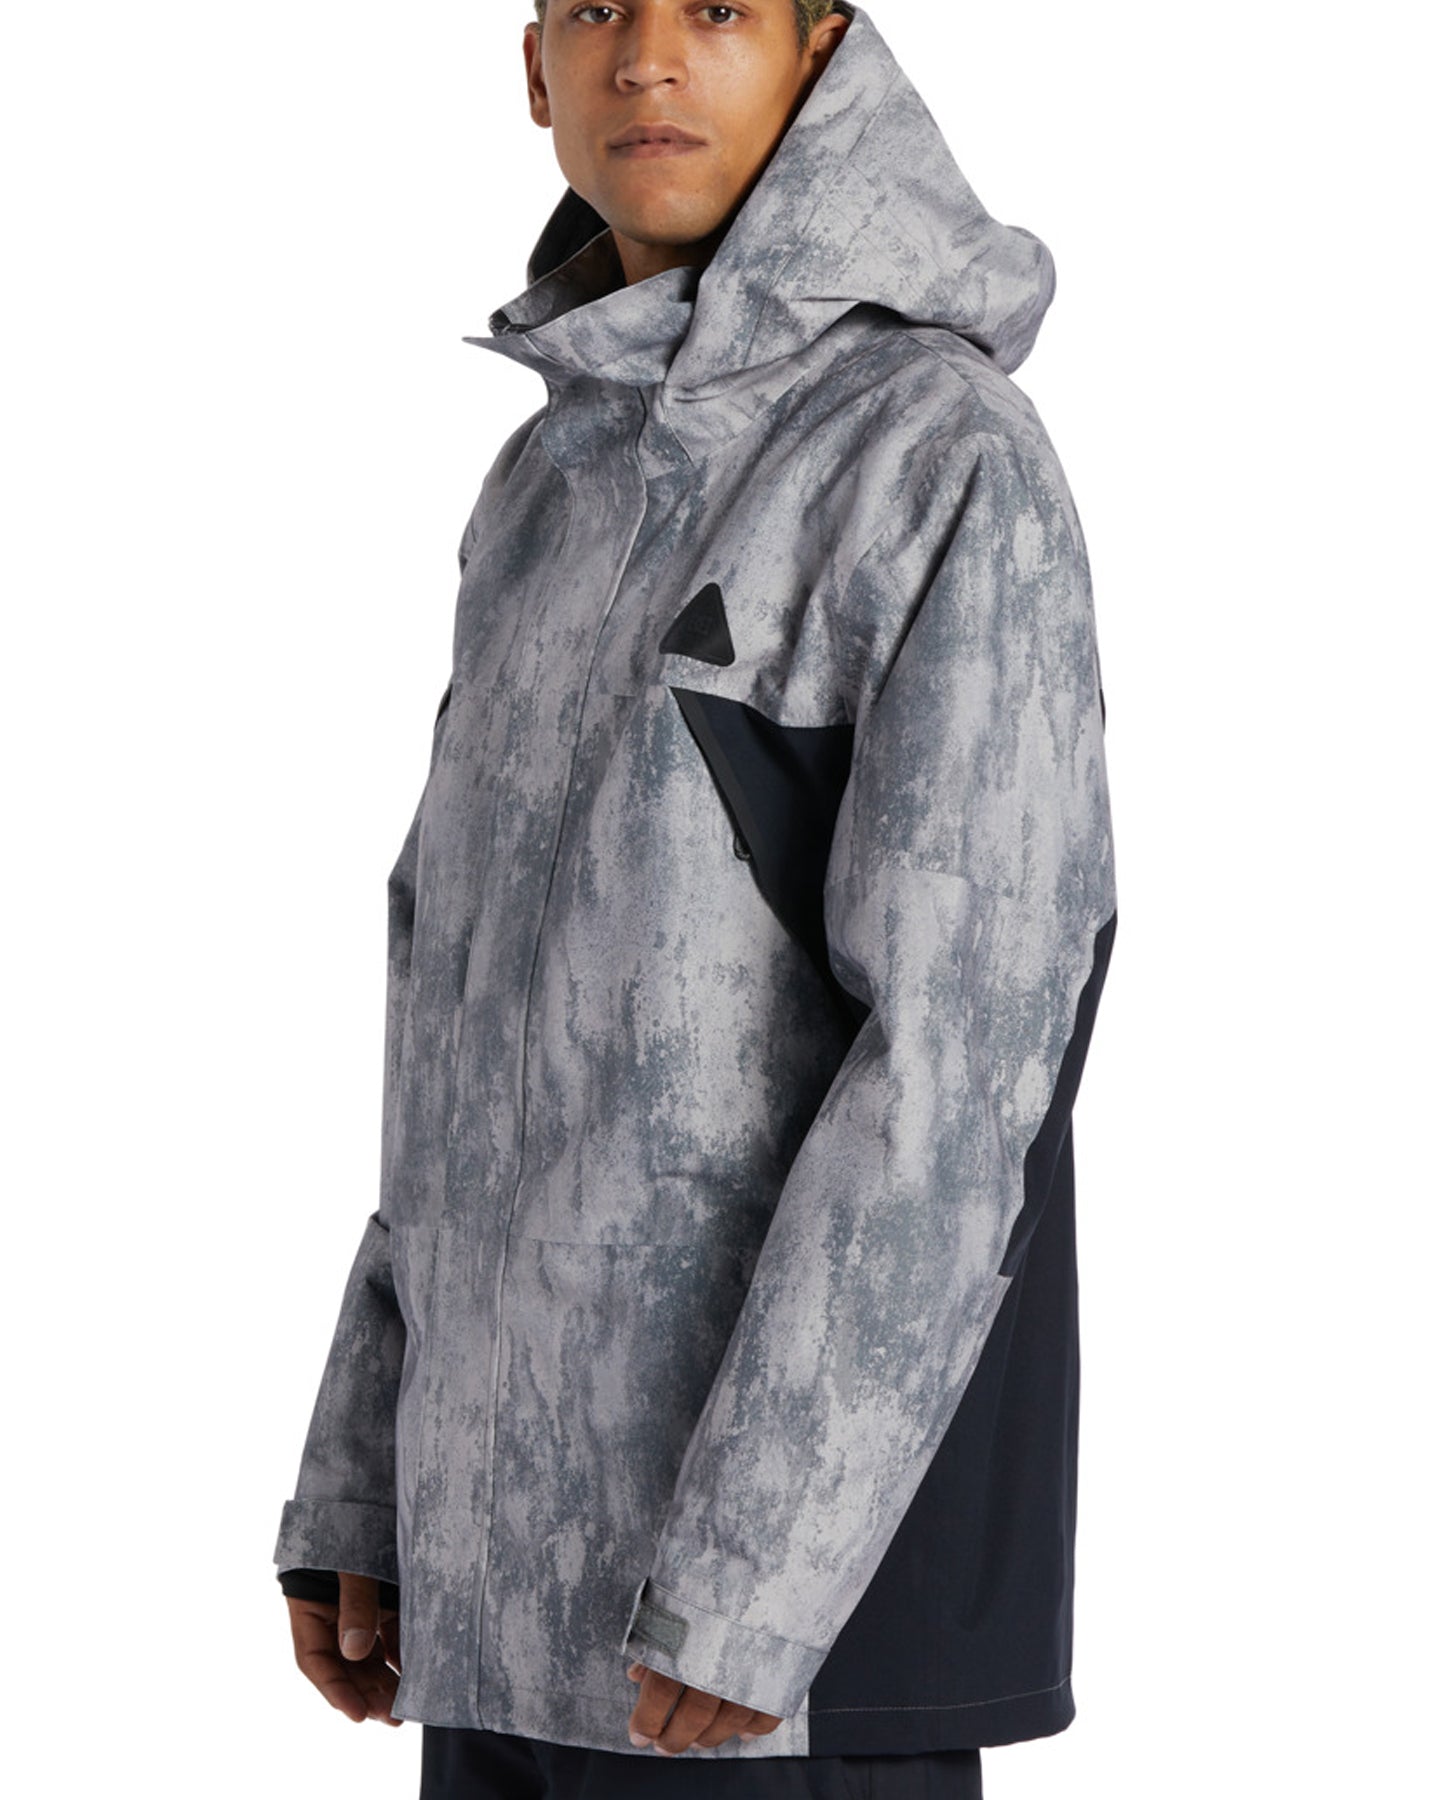 DC Command 45K Technical Snow Jacket - Grey Stone Men's Snow Jackets - SnowSkiersWarehouse